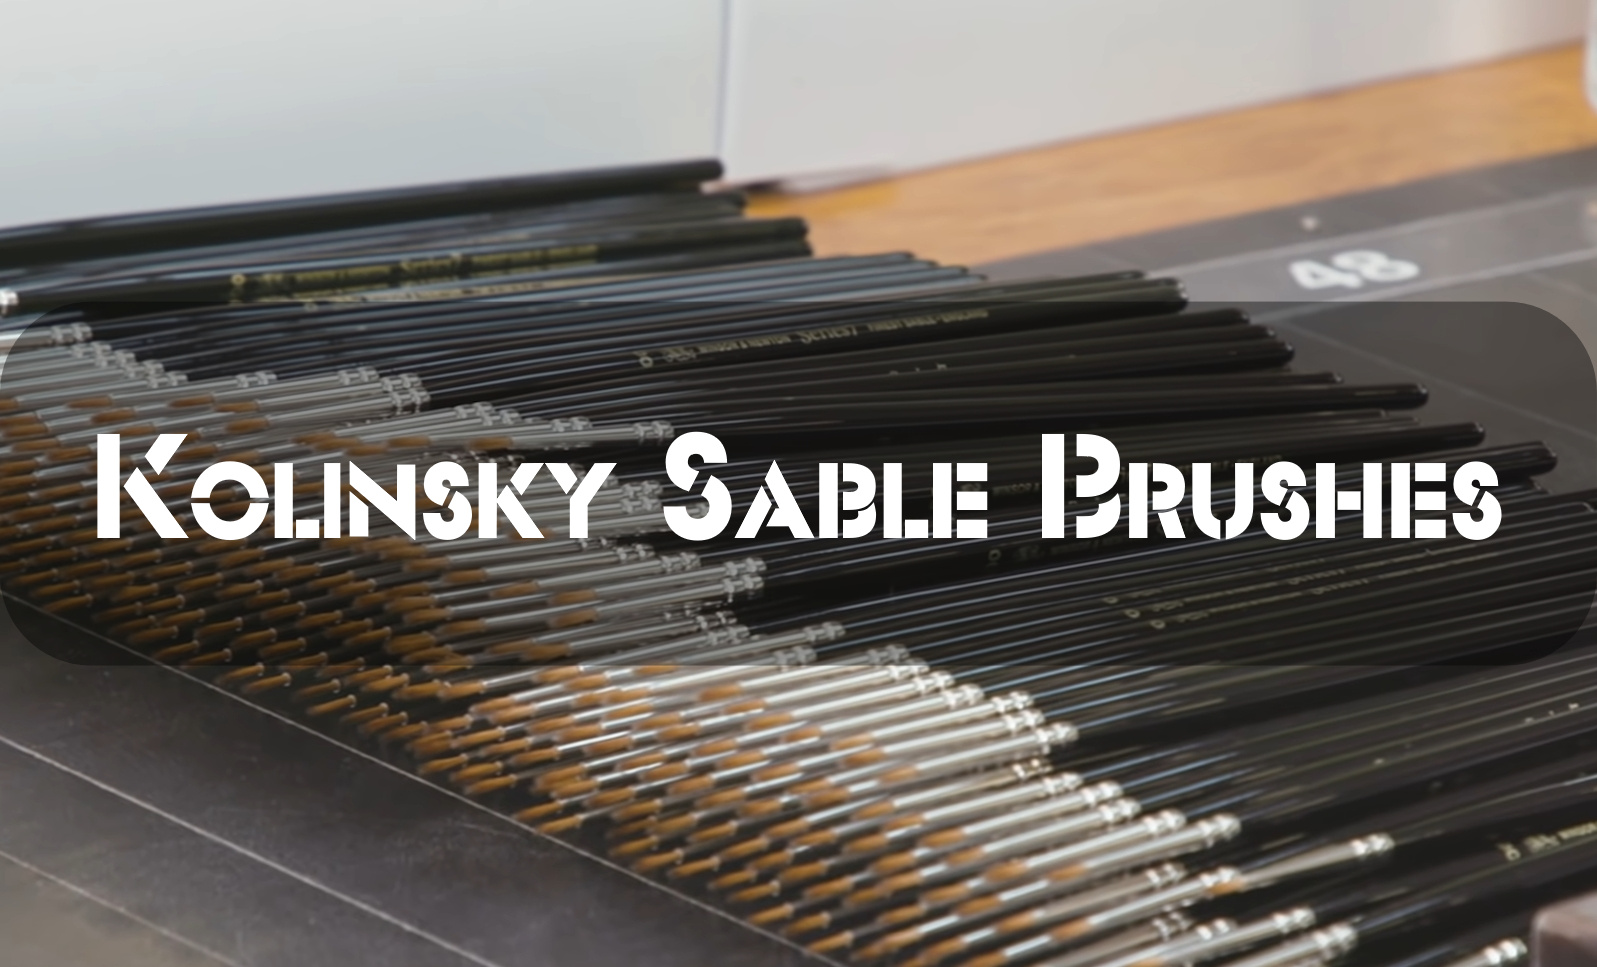 Kolinsky Sable Brushes